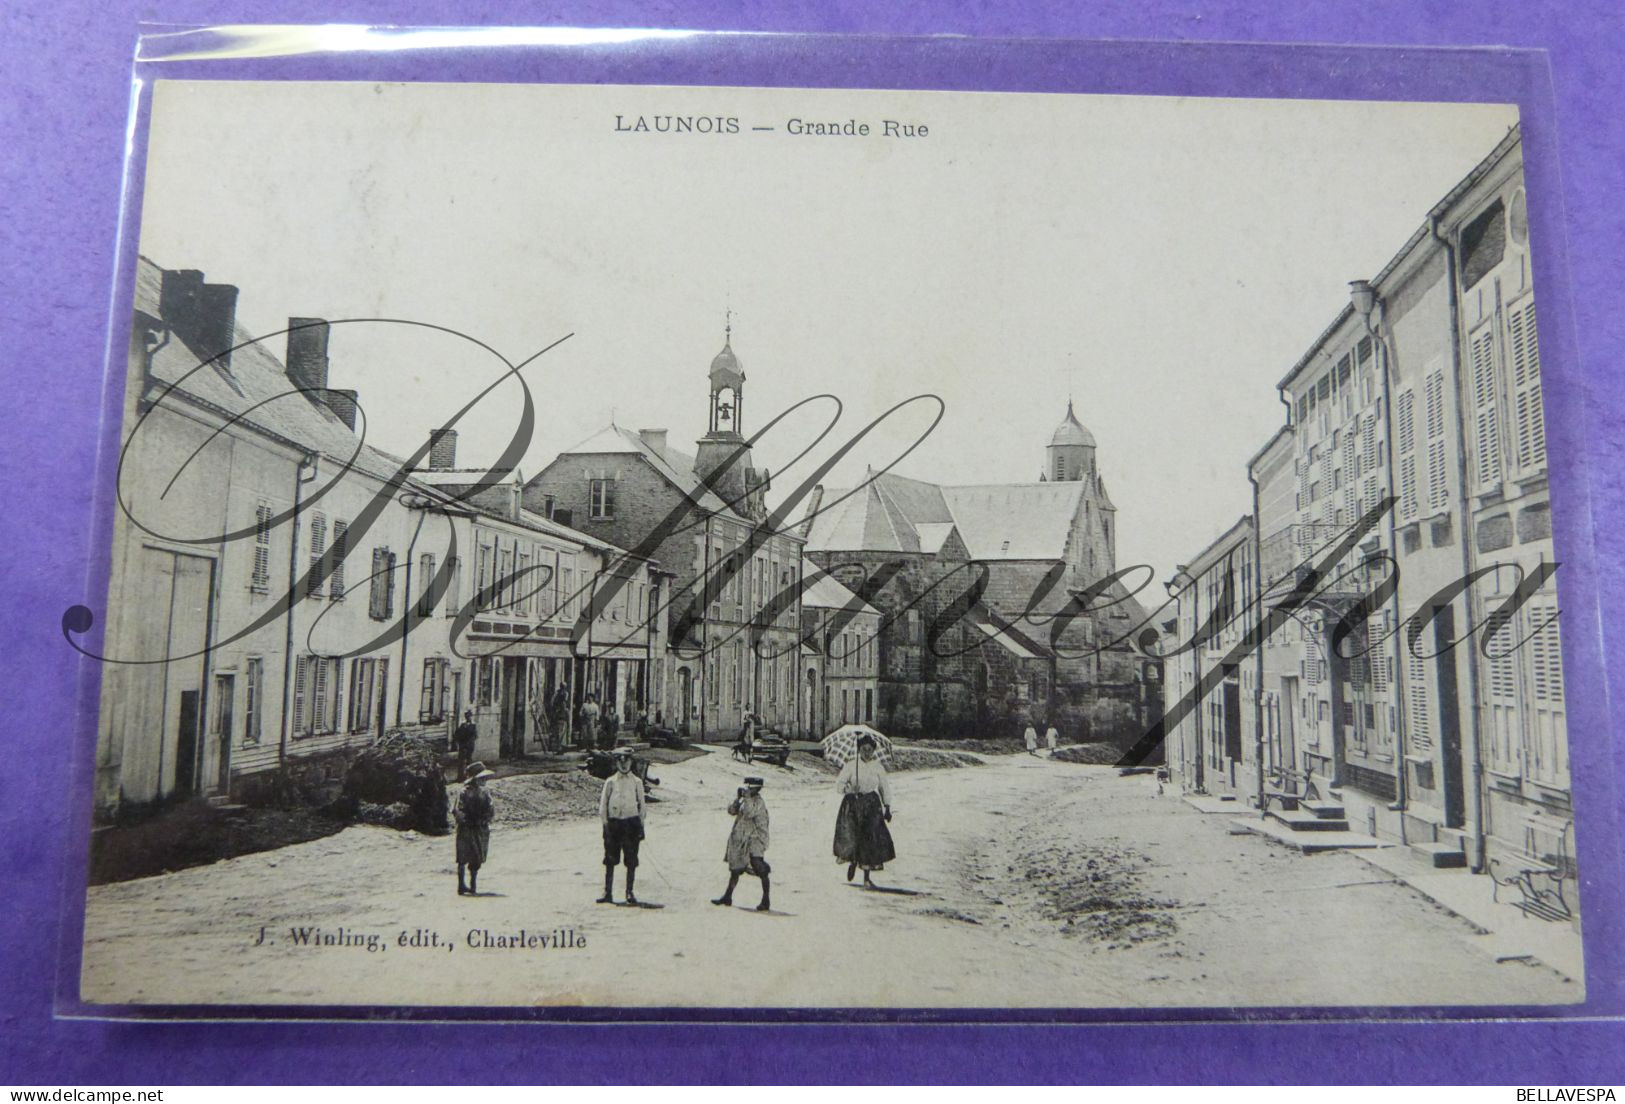 Launois Grande Rue  Edit J.Winling 1907 - Charleville